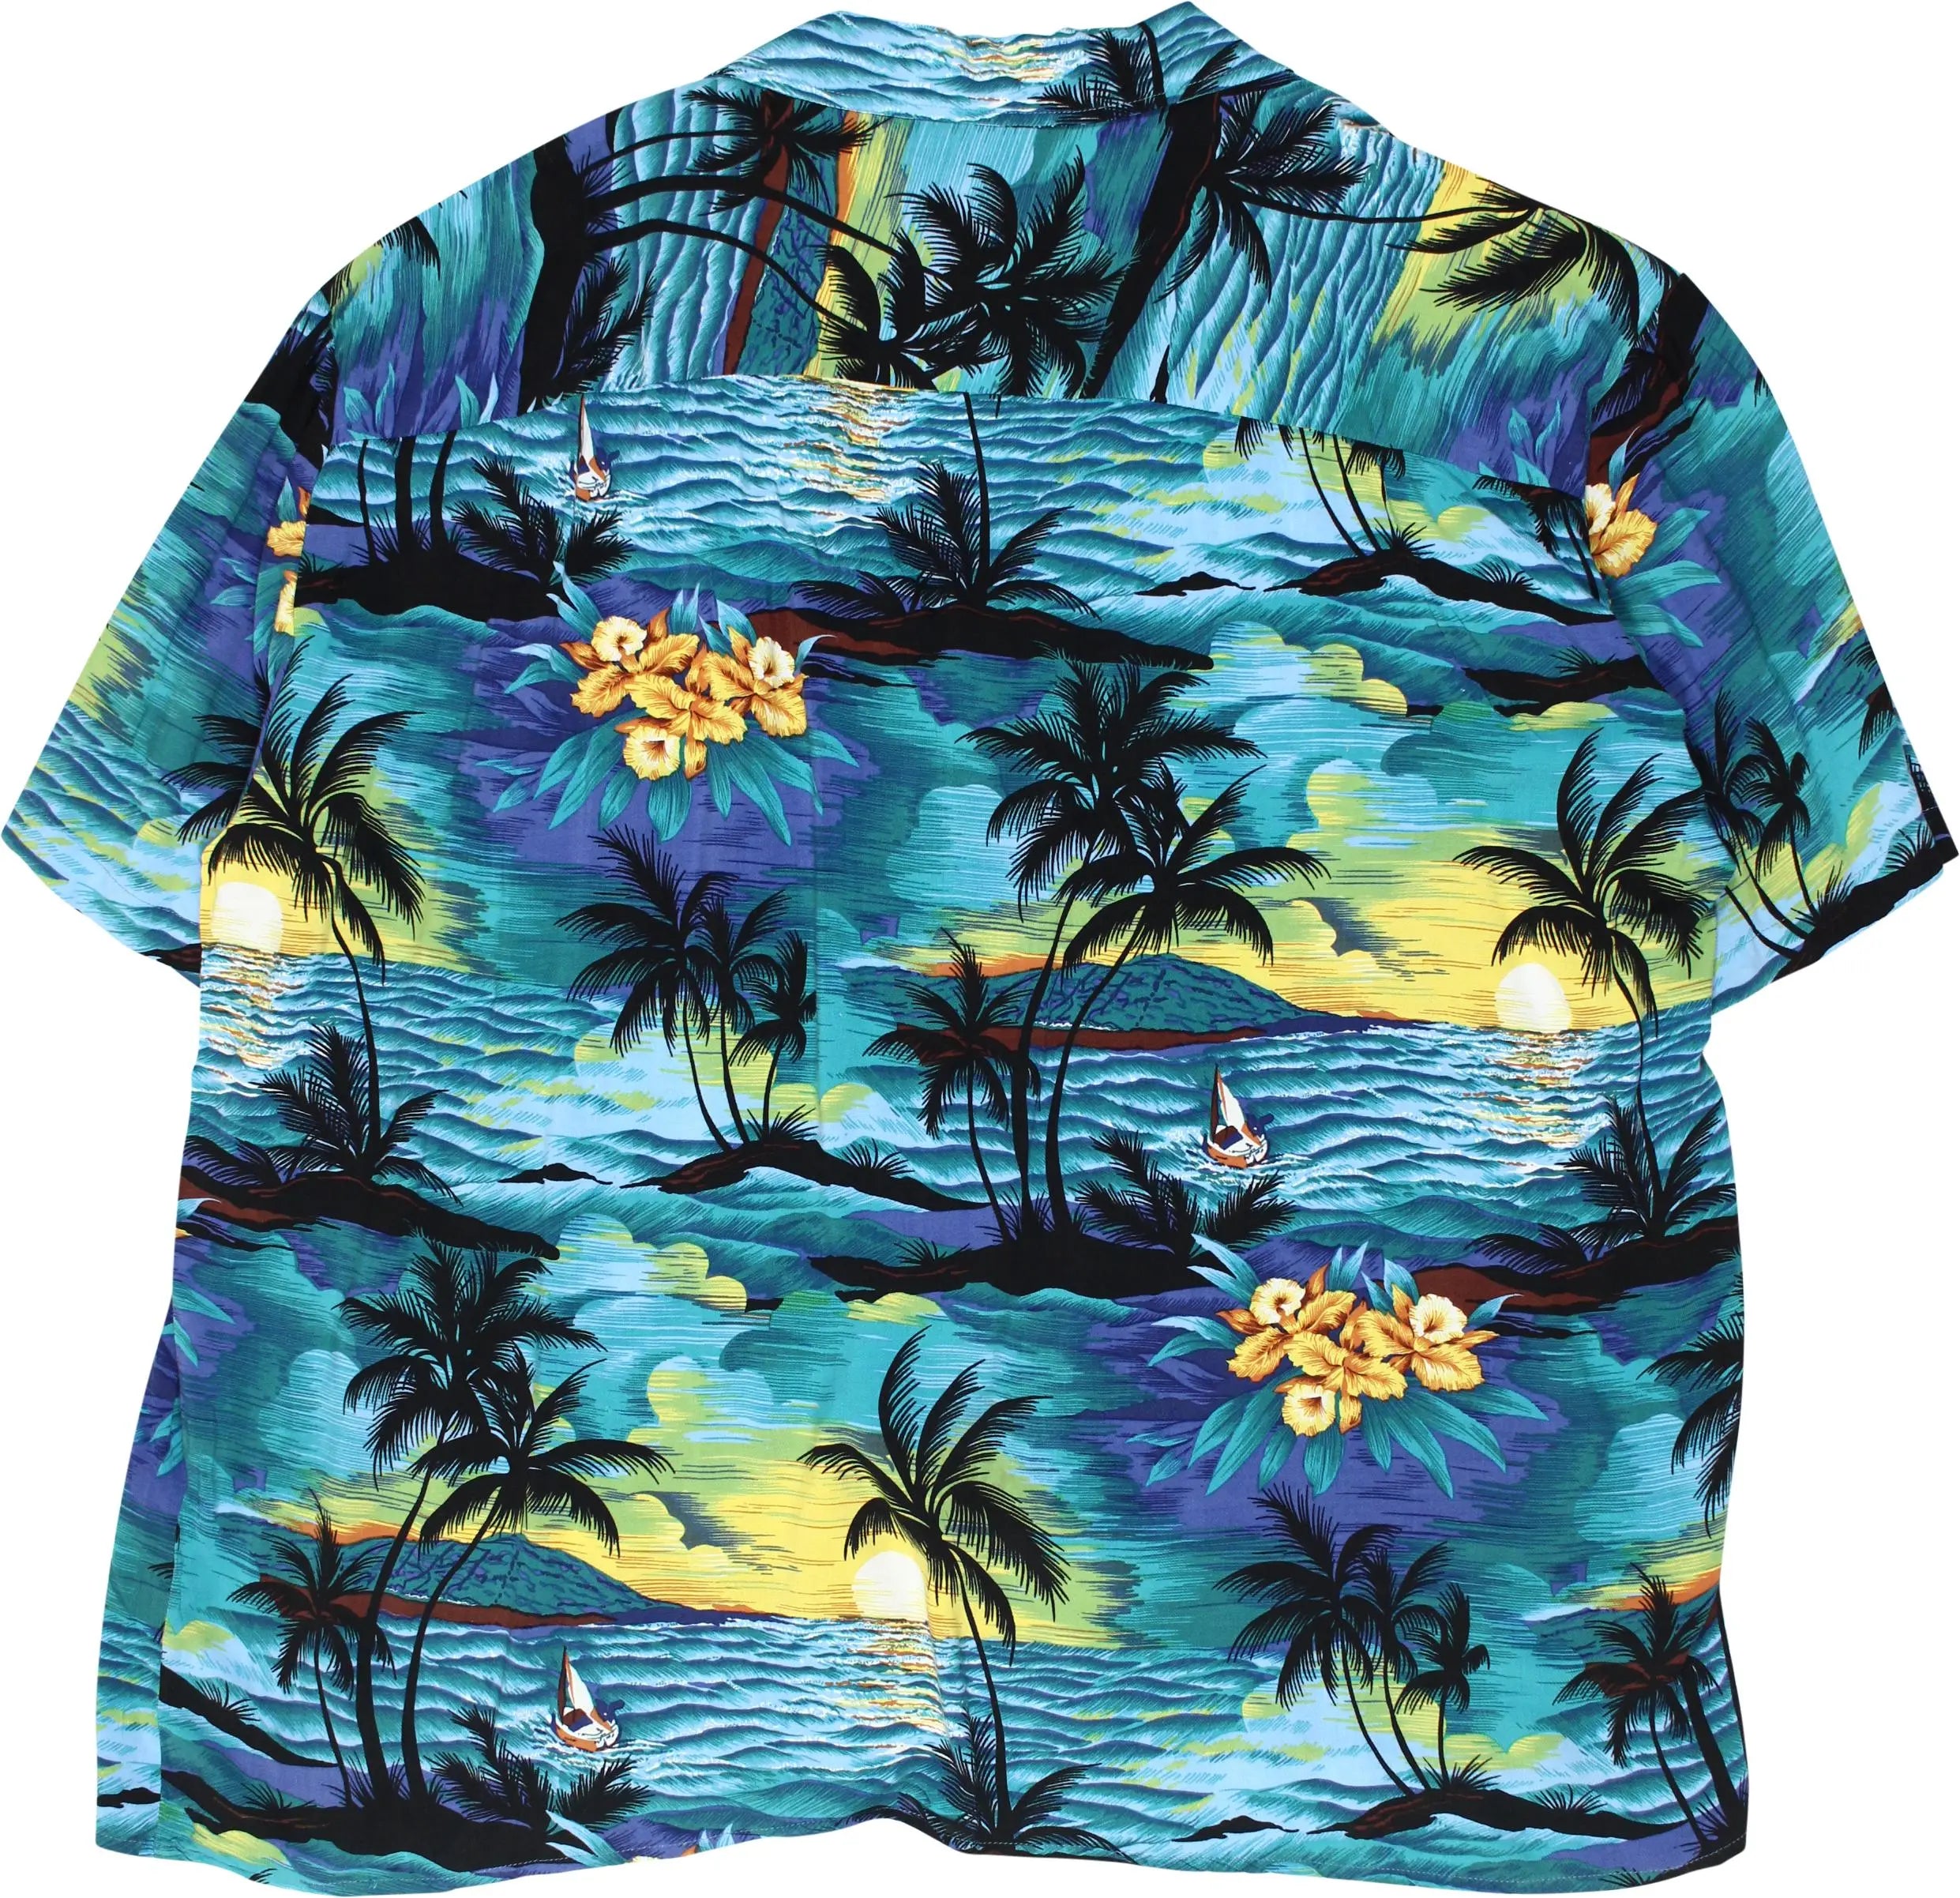 Maldint - Hawaiian Shirt- ThriftTale.com - Vintage and second handclothing